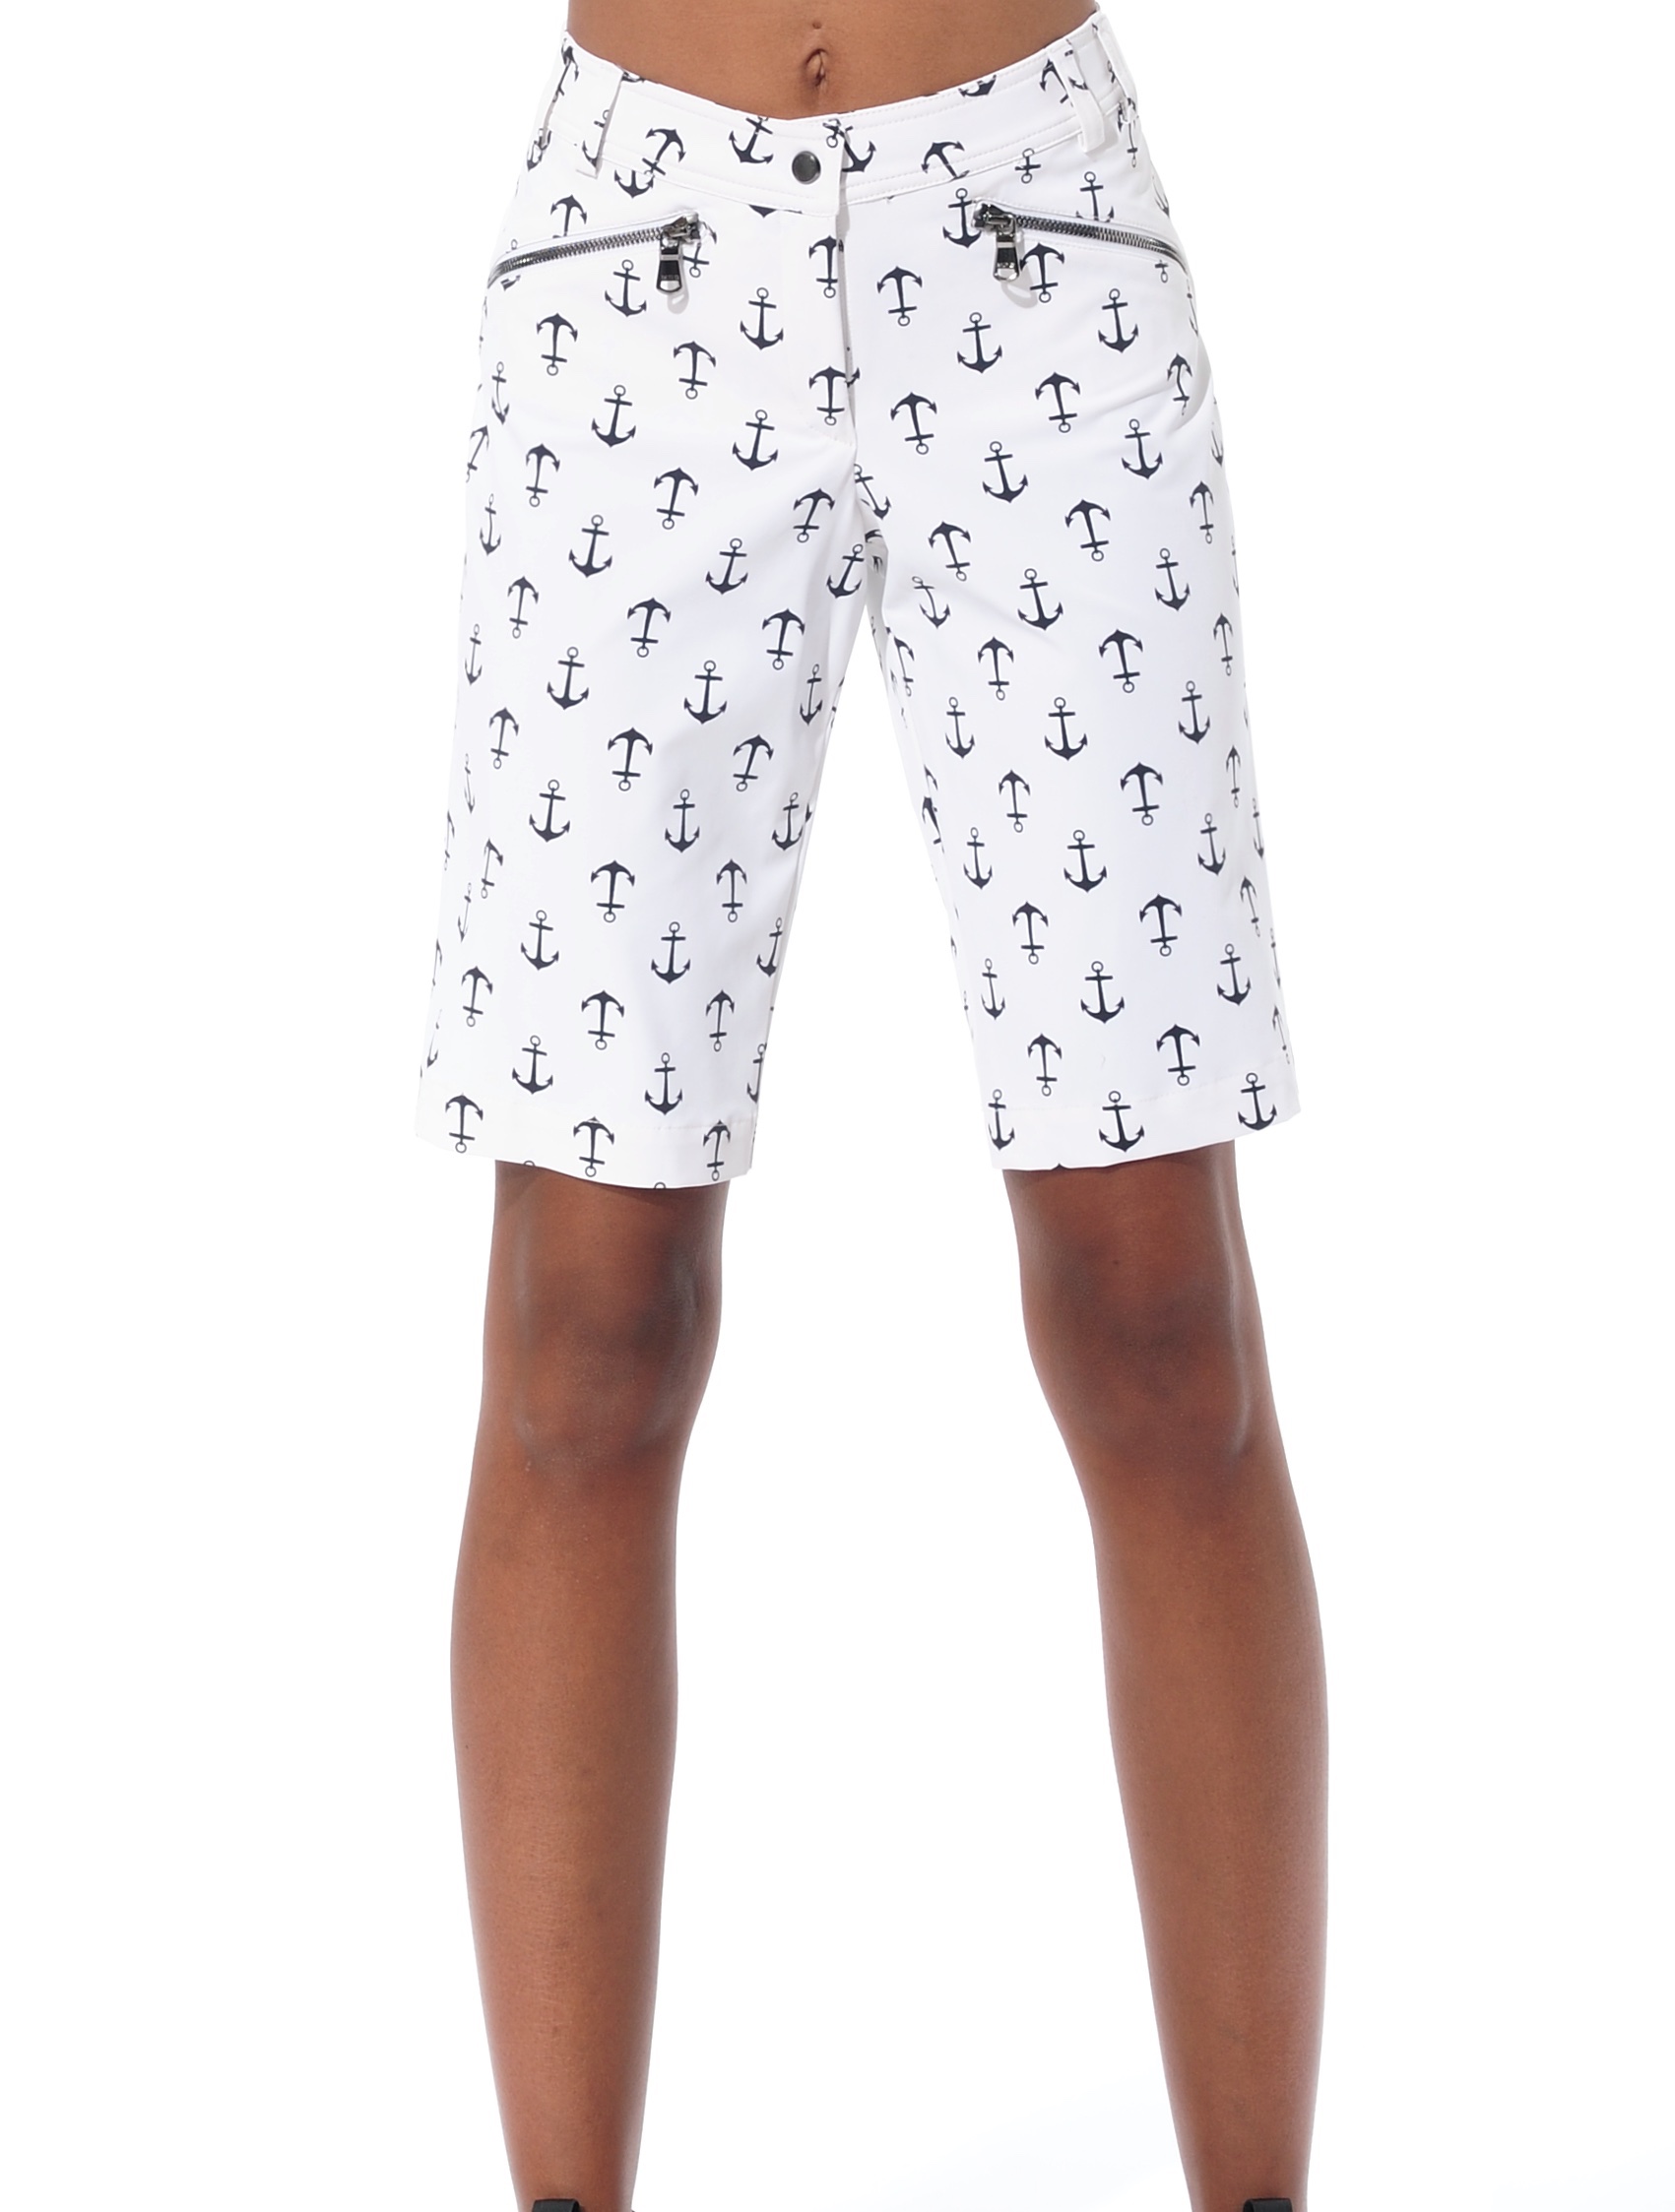 4way stretch print bermuda shorts black/white 